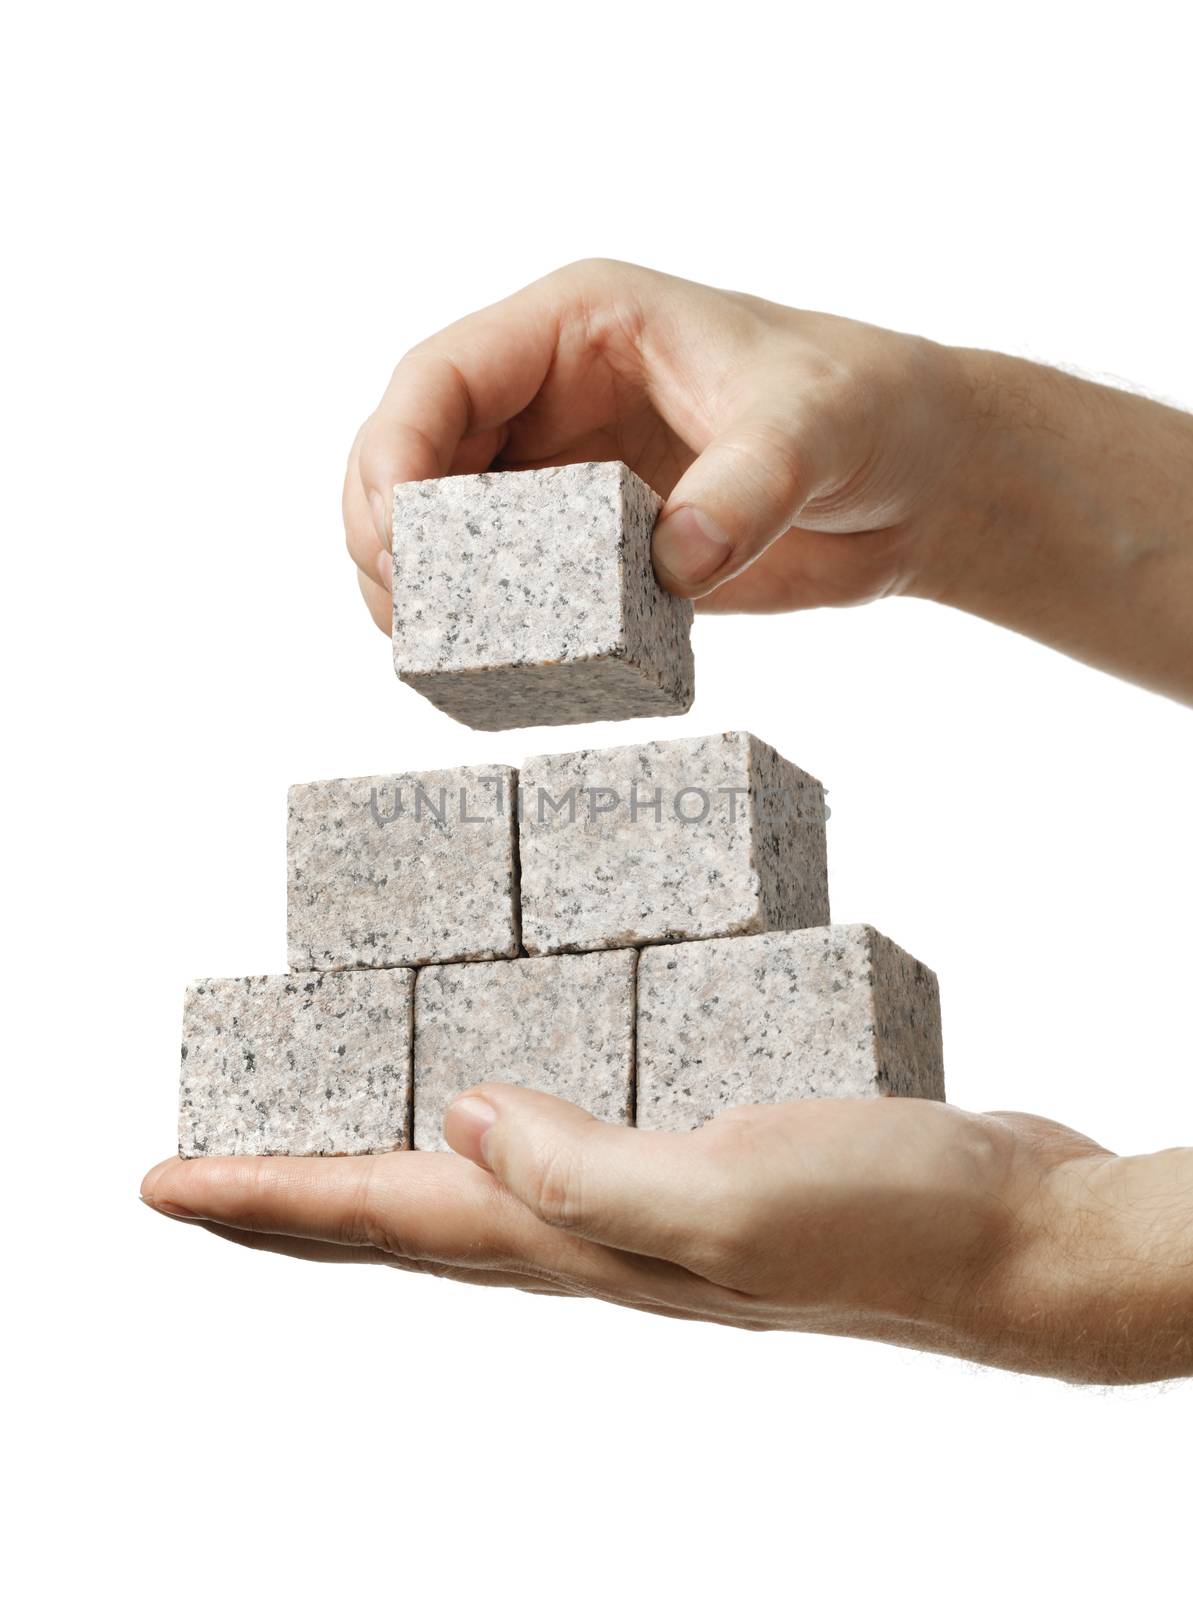 Man stacking small blocks of granite rock in his hands.